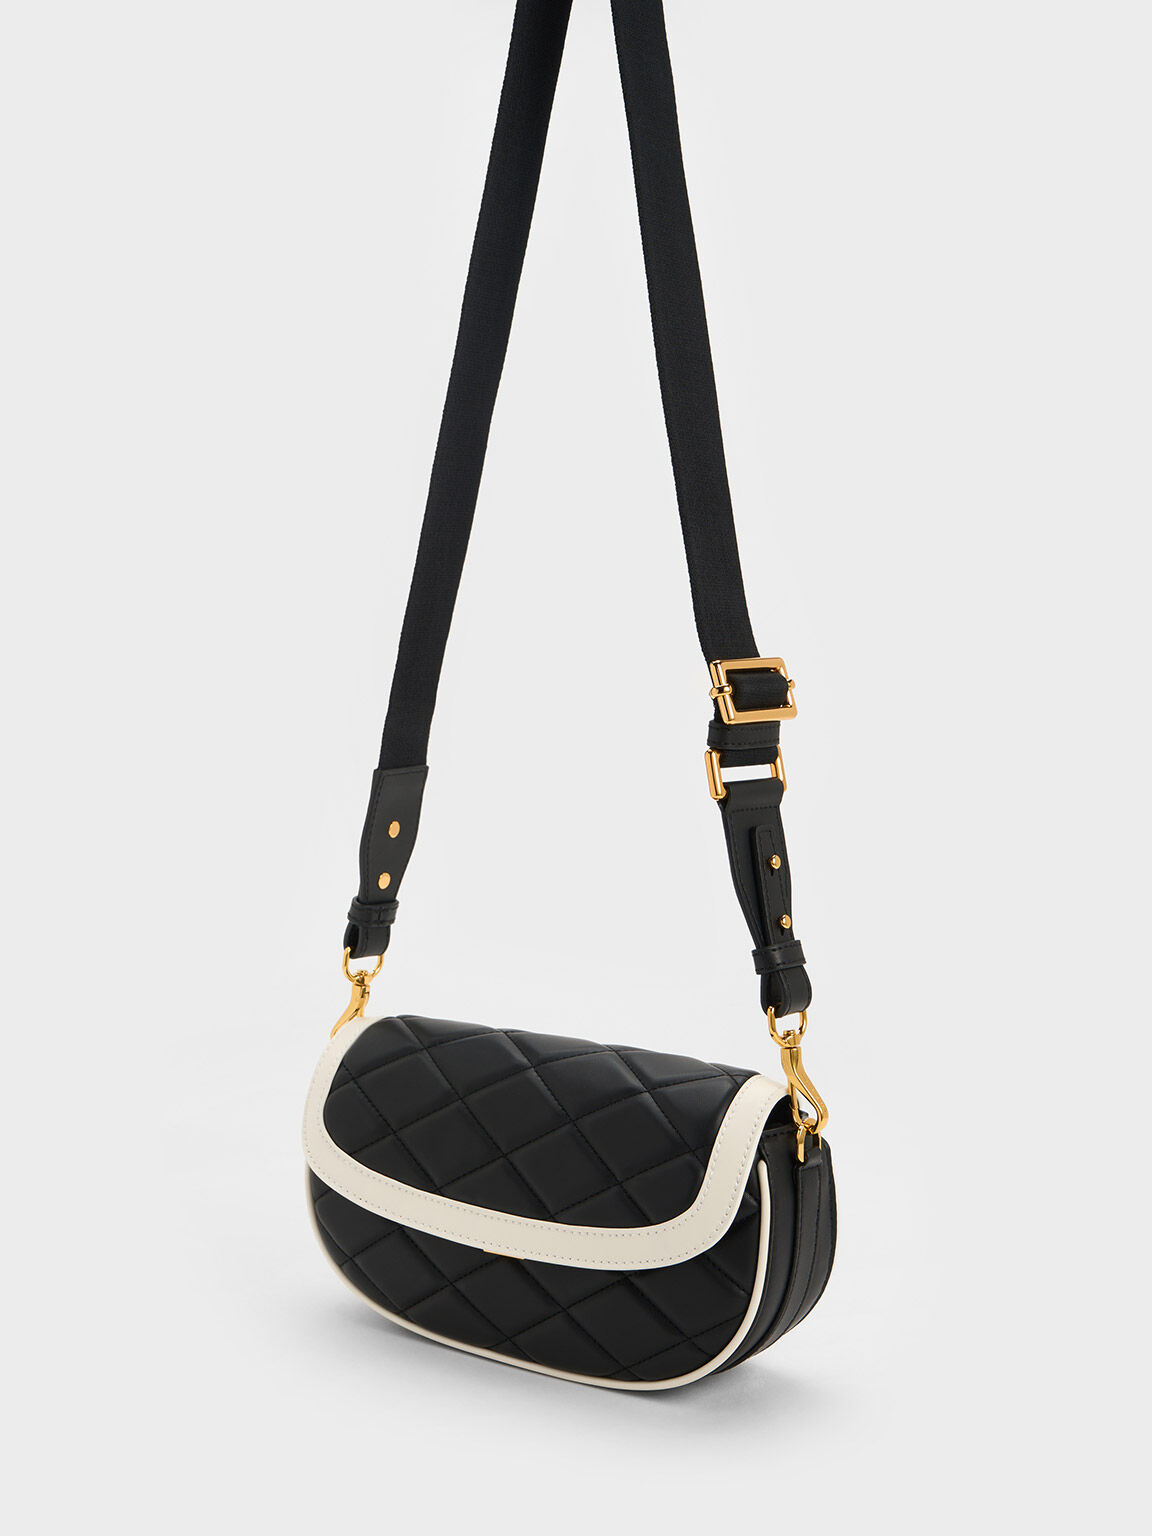 Lillie Curved Chain Handle Bag, Black, hi-res